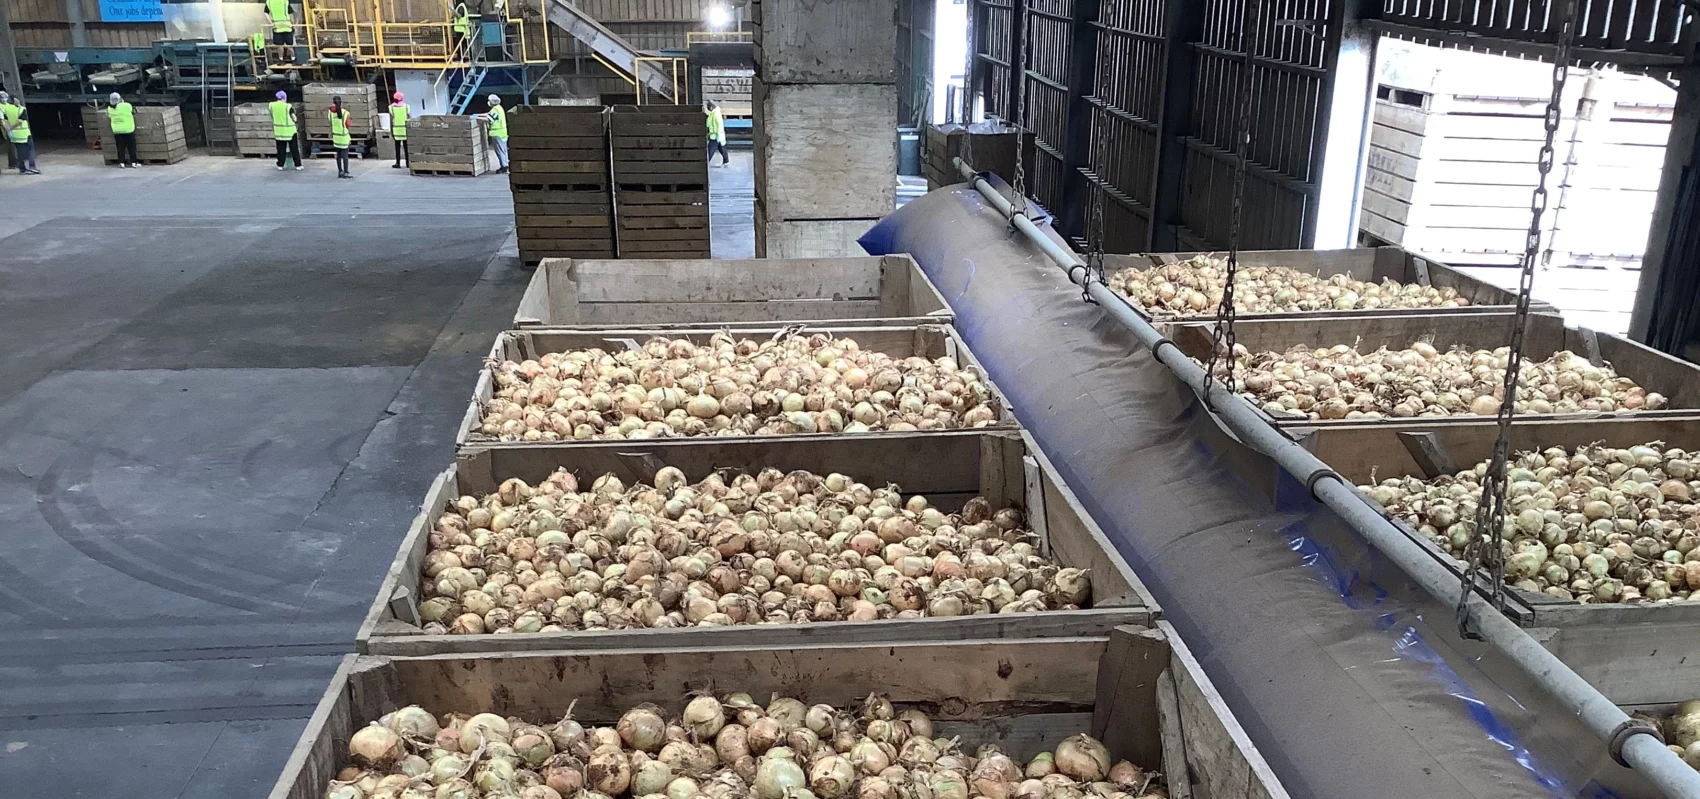 photo of lots of onions bins